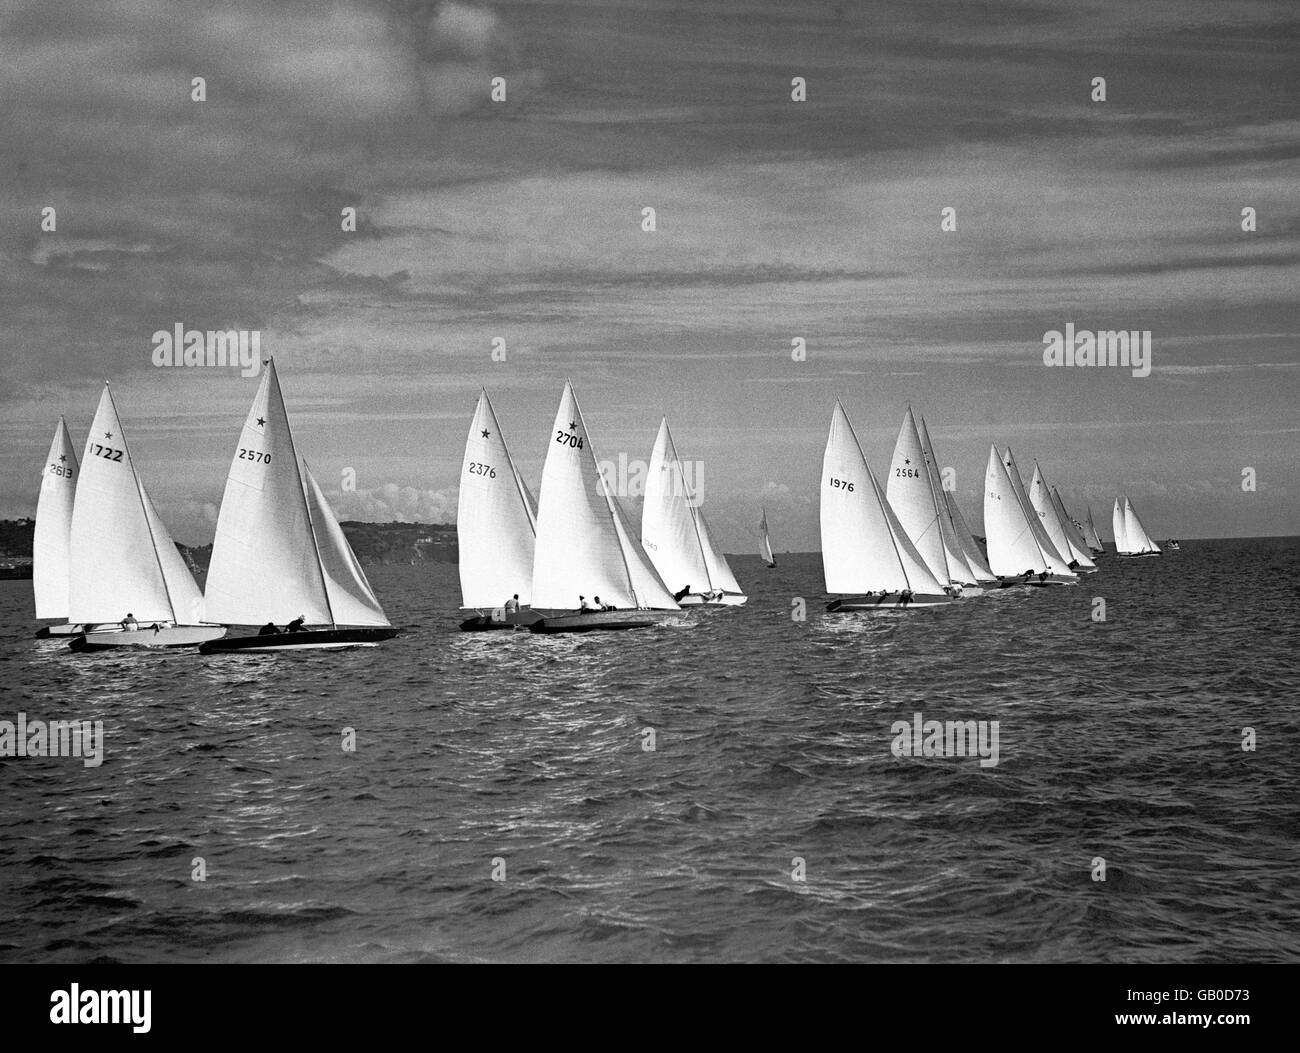 Giochi Olimpici di Londra 1948 - vela - Torbay. Una gara di classe Star in corso, yacht 1976 è l'ingresso della Gran Bretagna 'Gem II'. Foto Stock